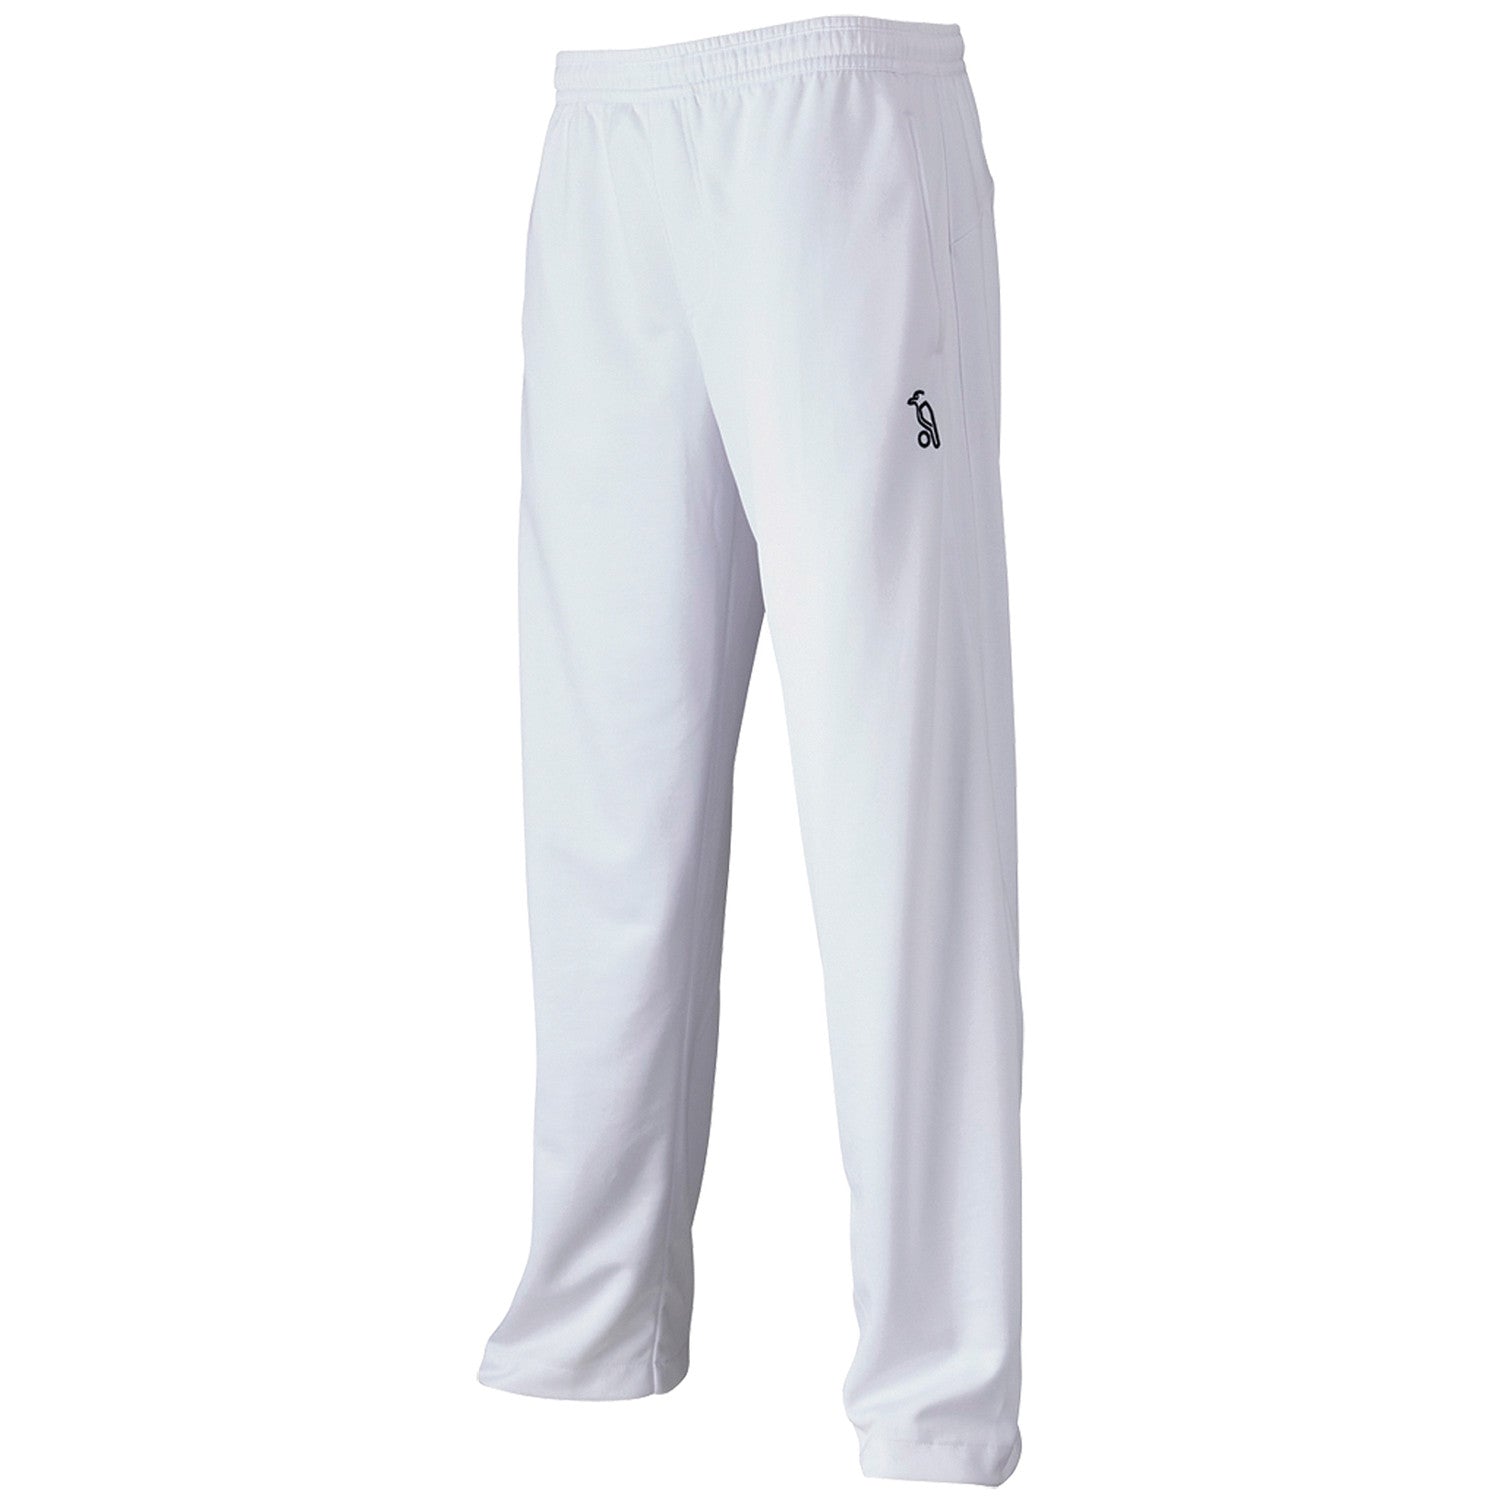 Kookaburra Pro Active Cricket Trousers White - Junior & Senior